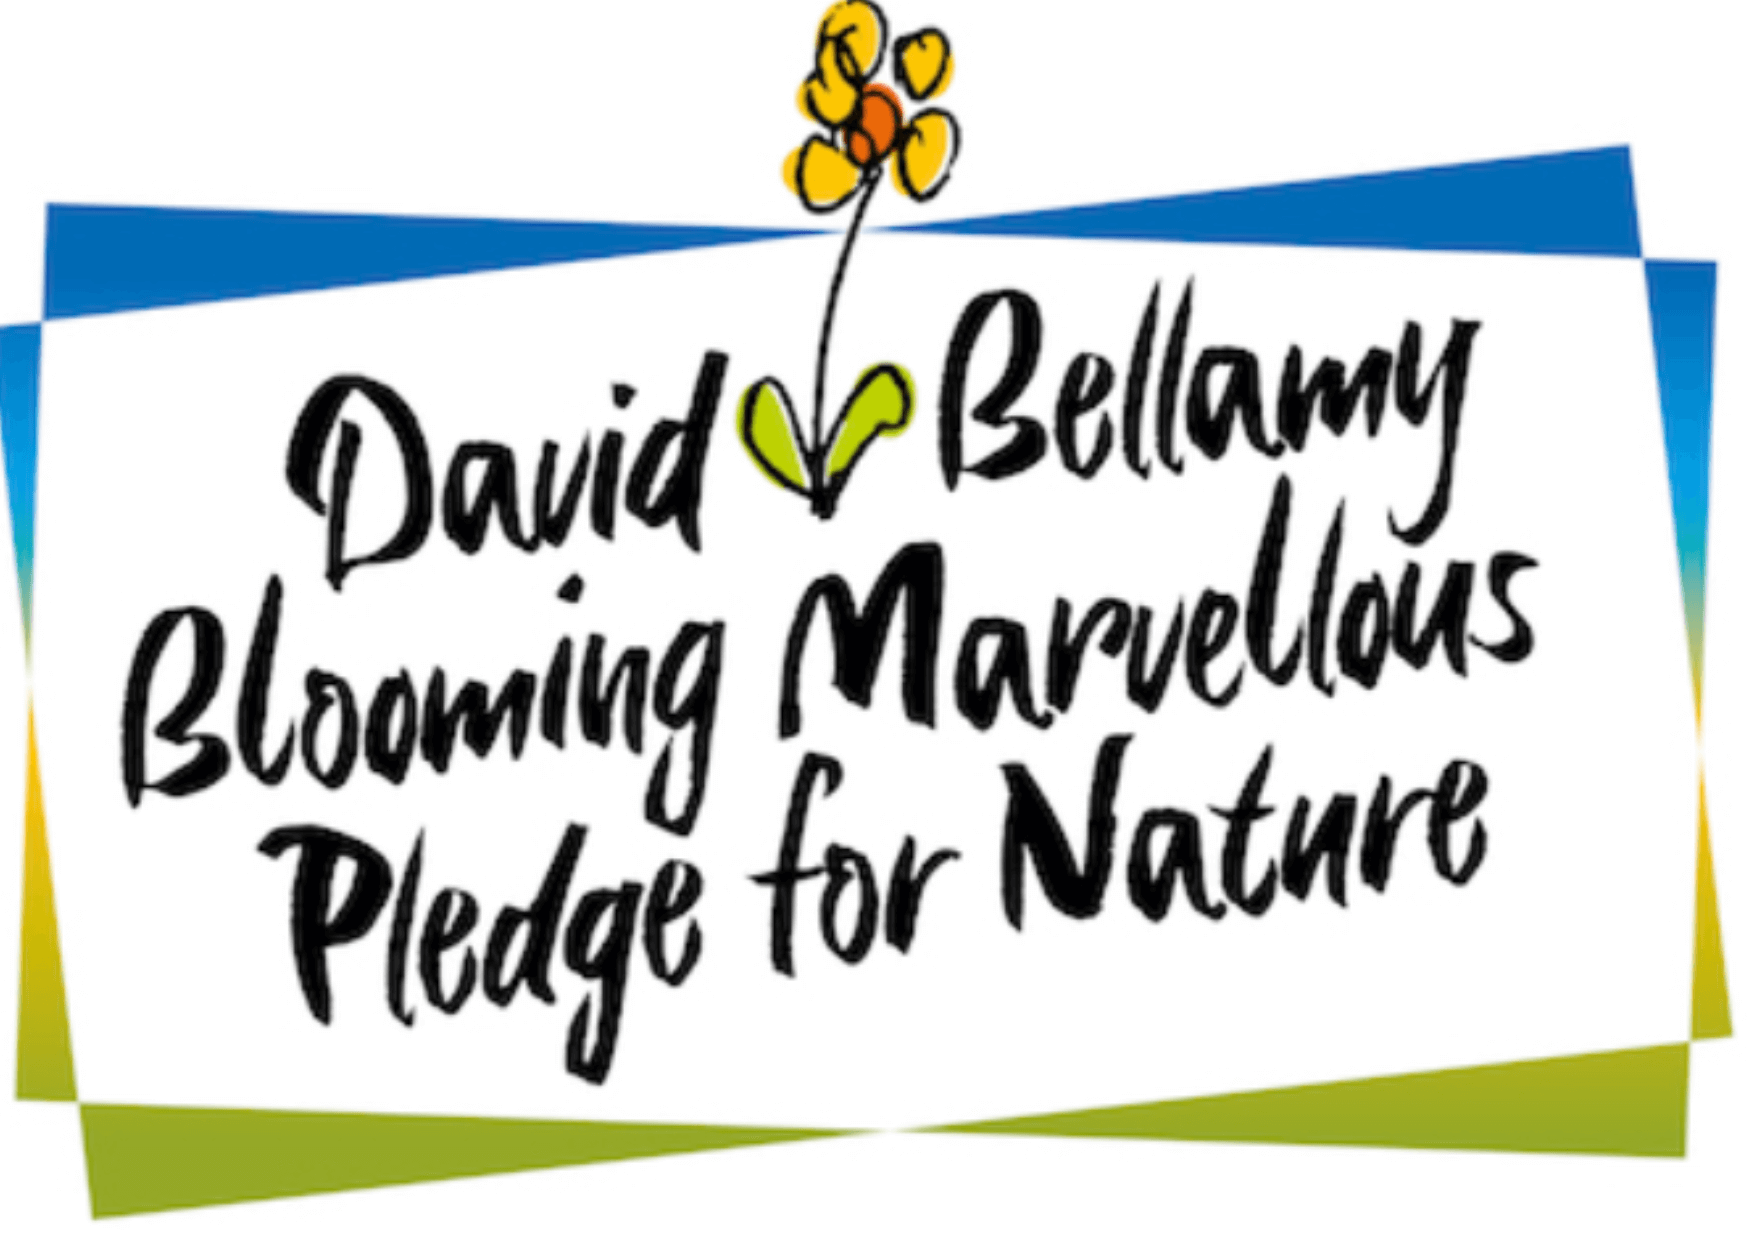 David Bellamy Pledge 2021